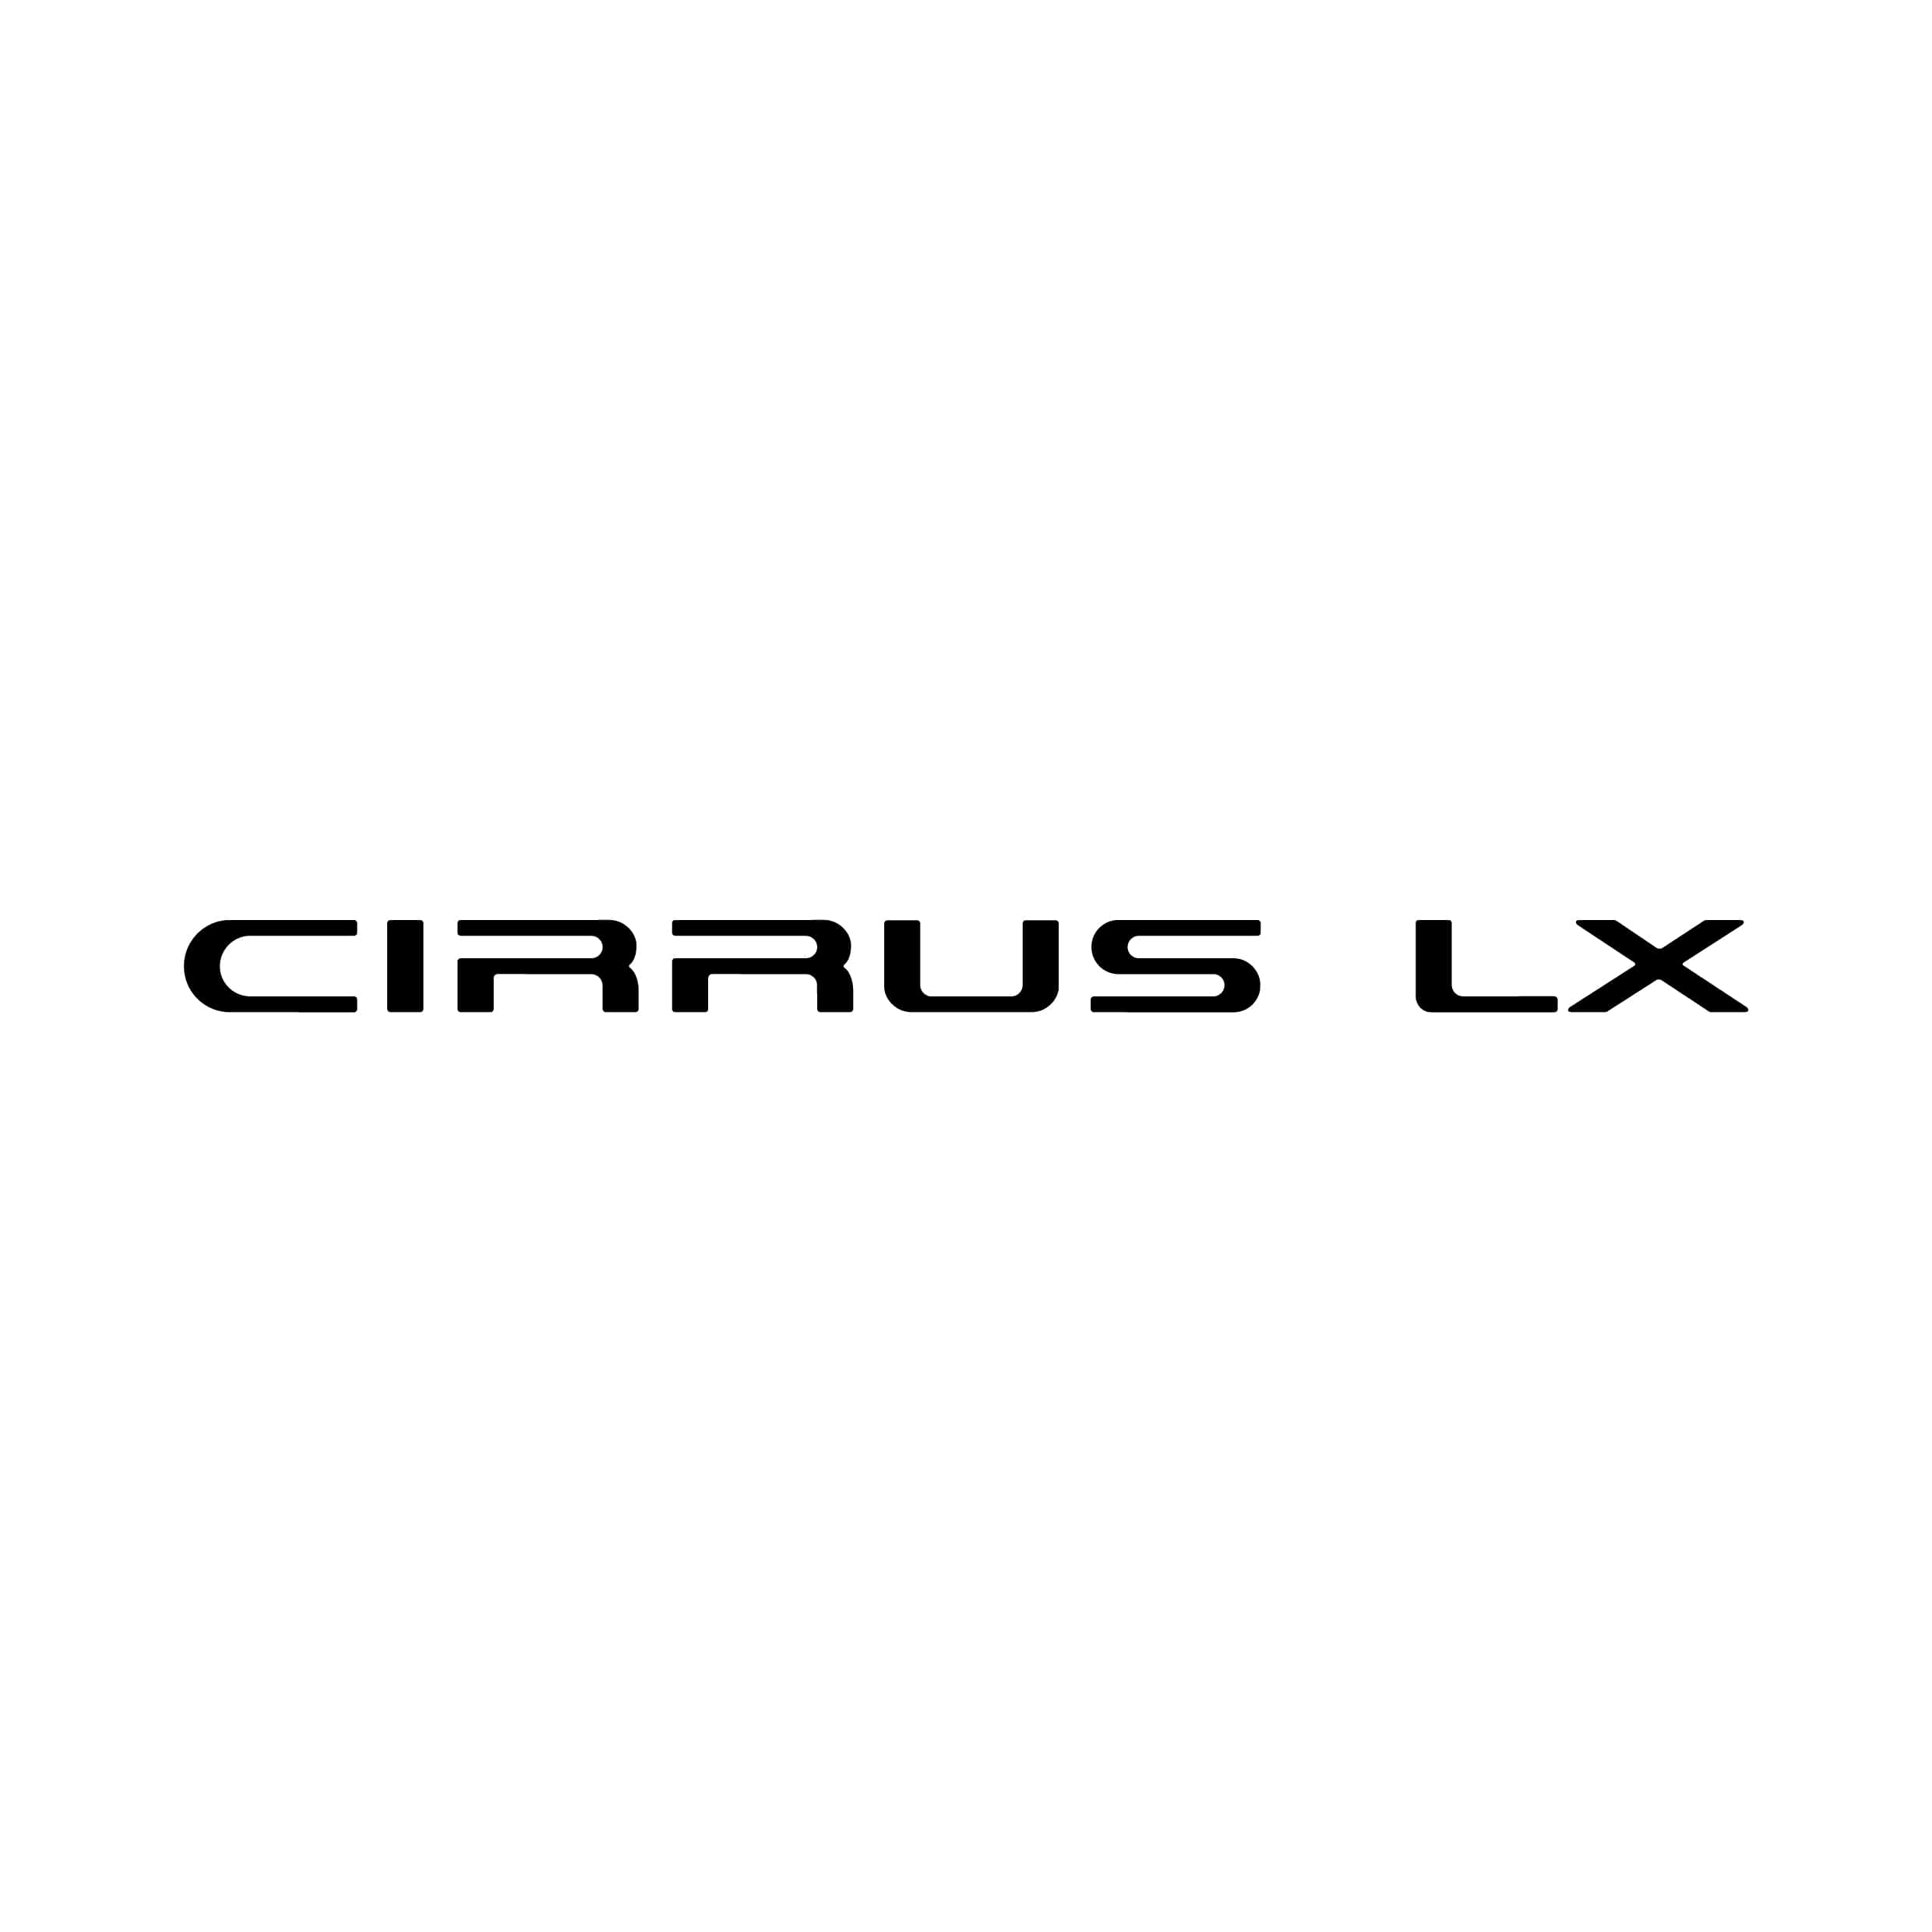 stickers-chrysler-cirrus-lx-ref14-autocollant-voiture-sticker-auto-autocollants-decals-sponsors-racing-tuning-sport-logo-min